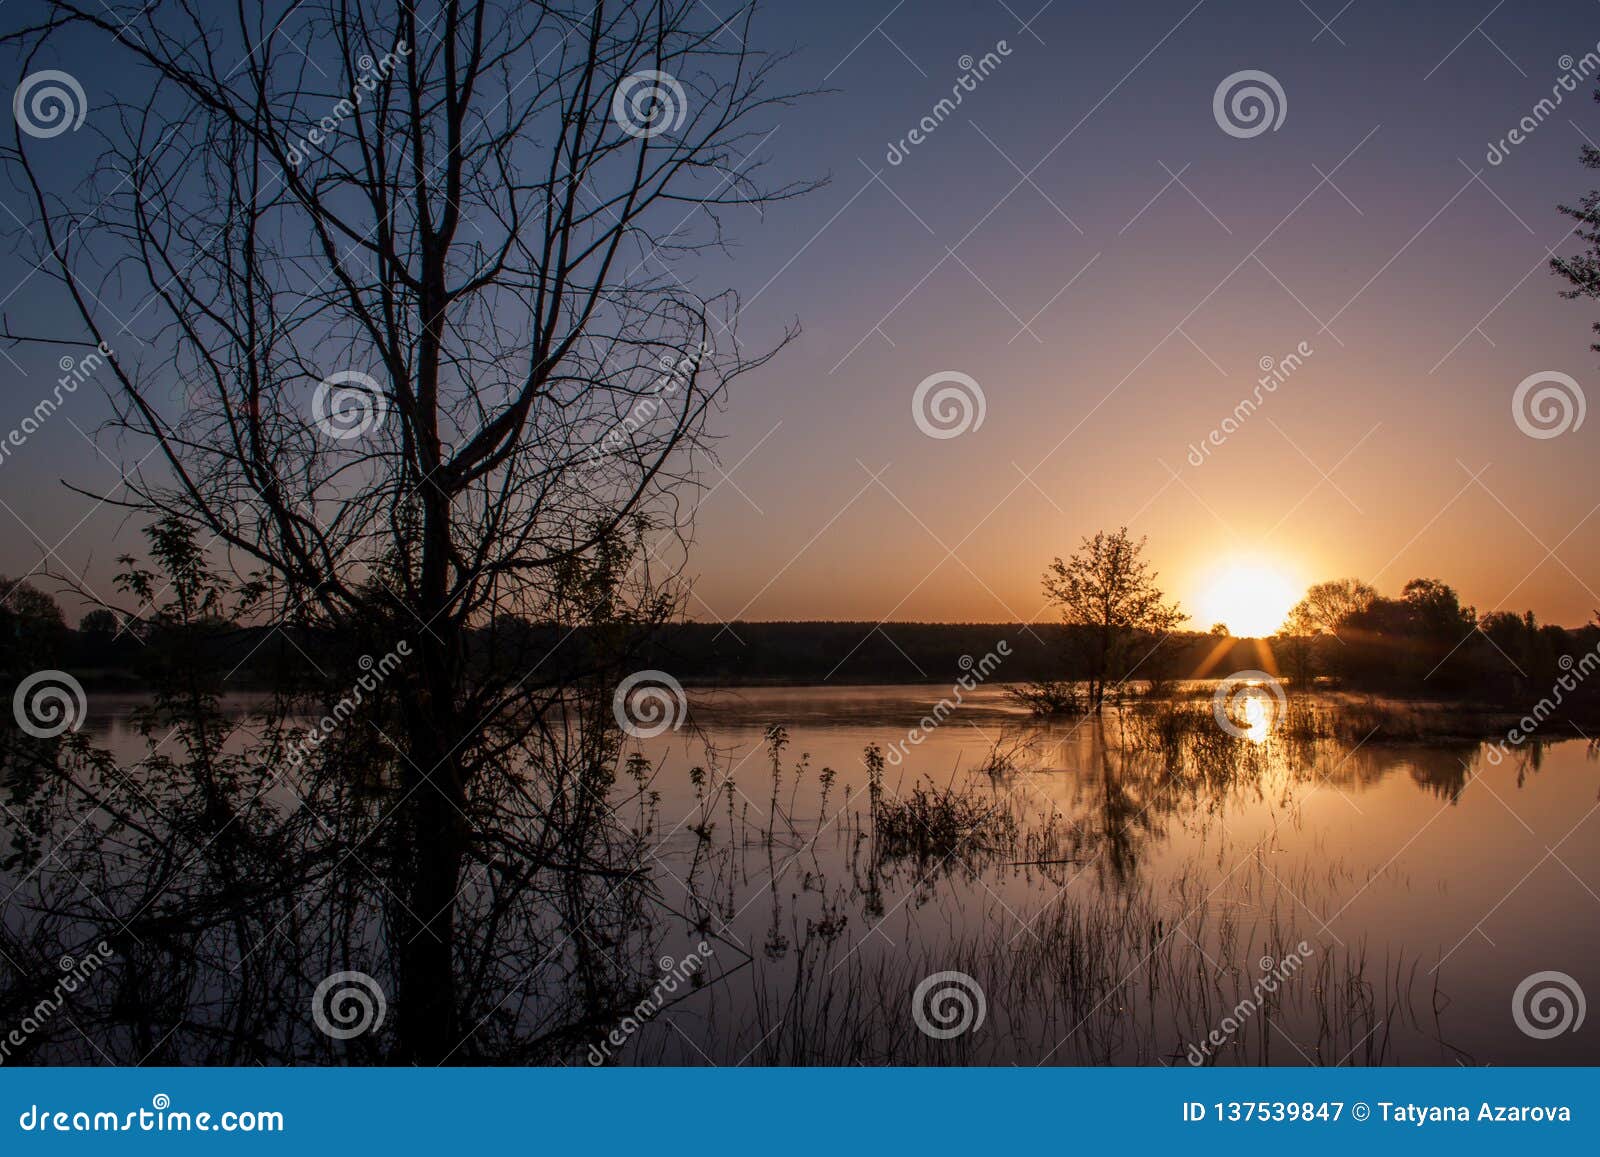 sunrise over lake in the spring, landscape in penumbra, reflection